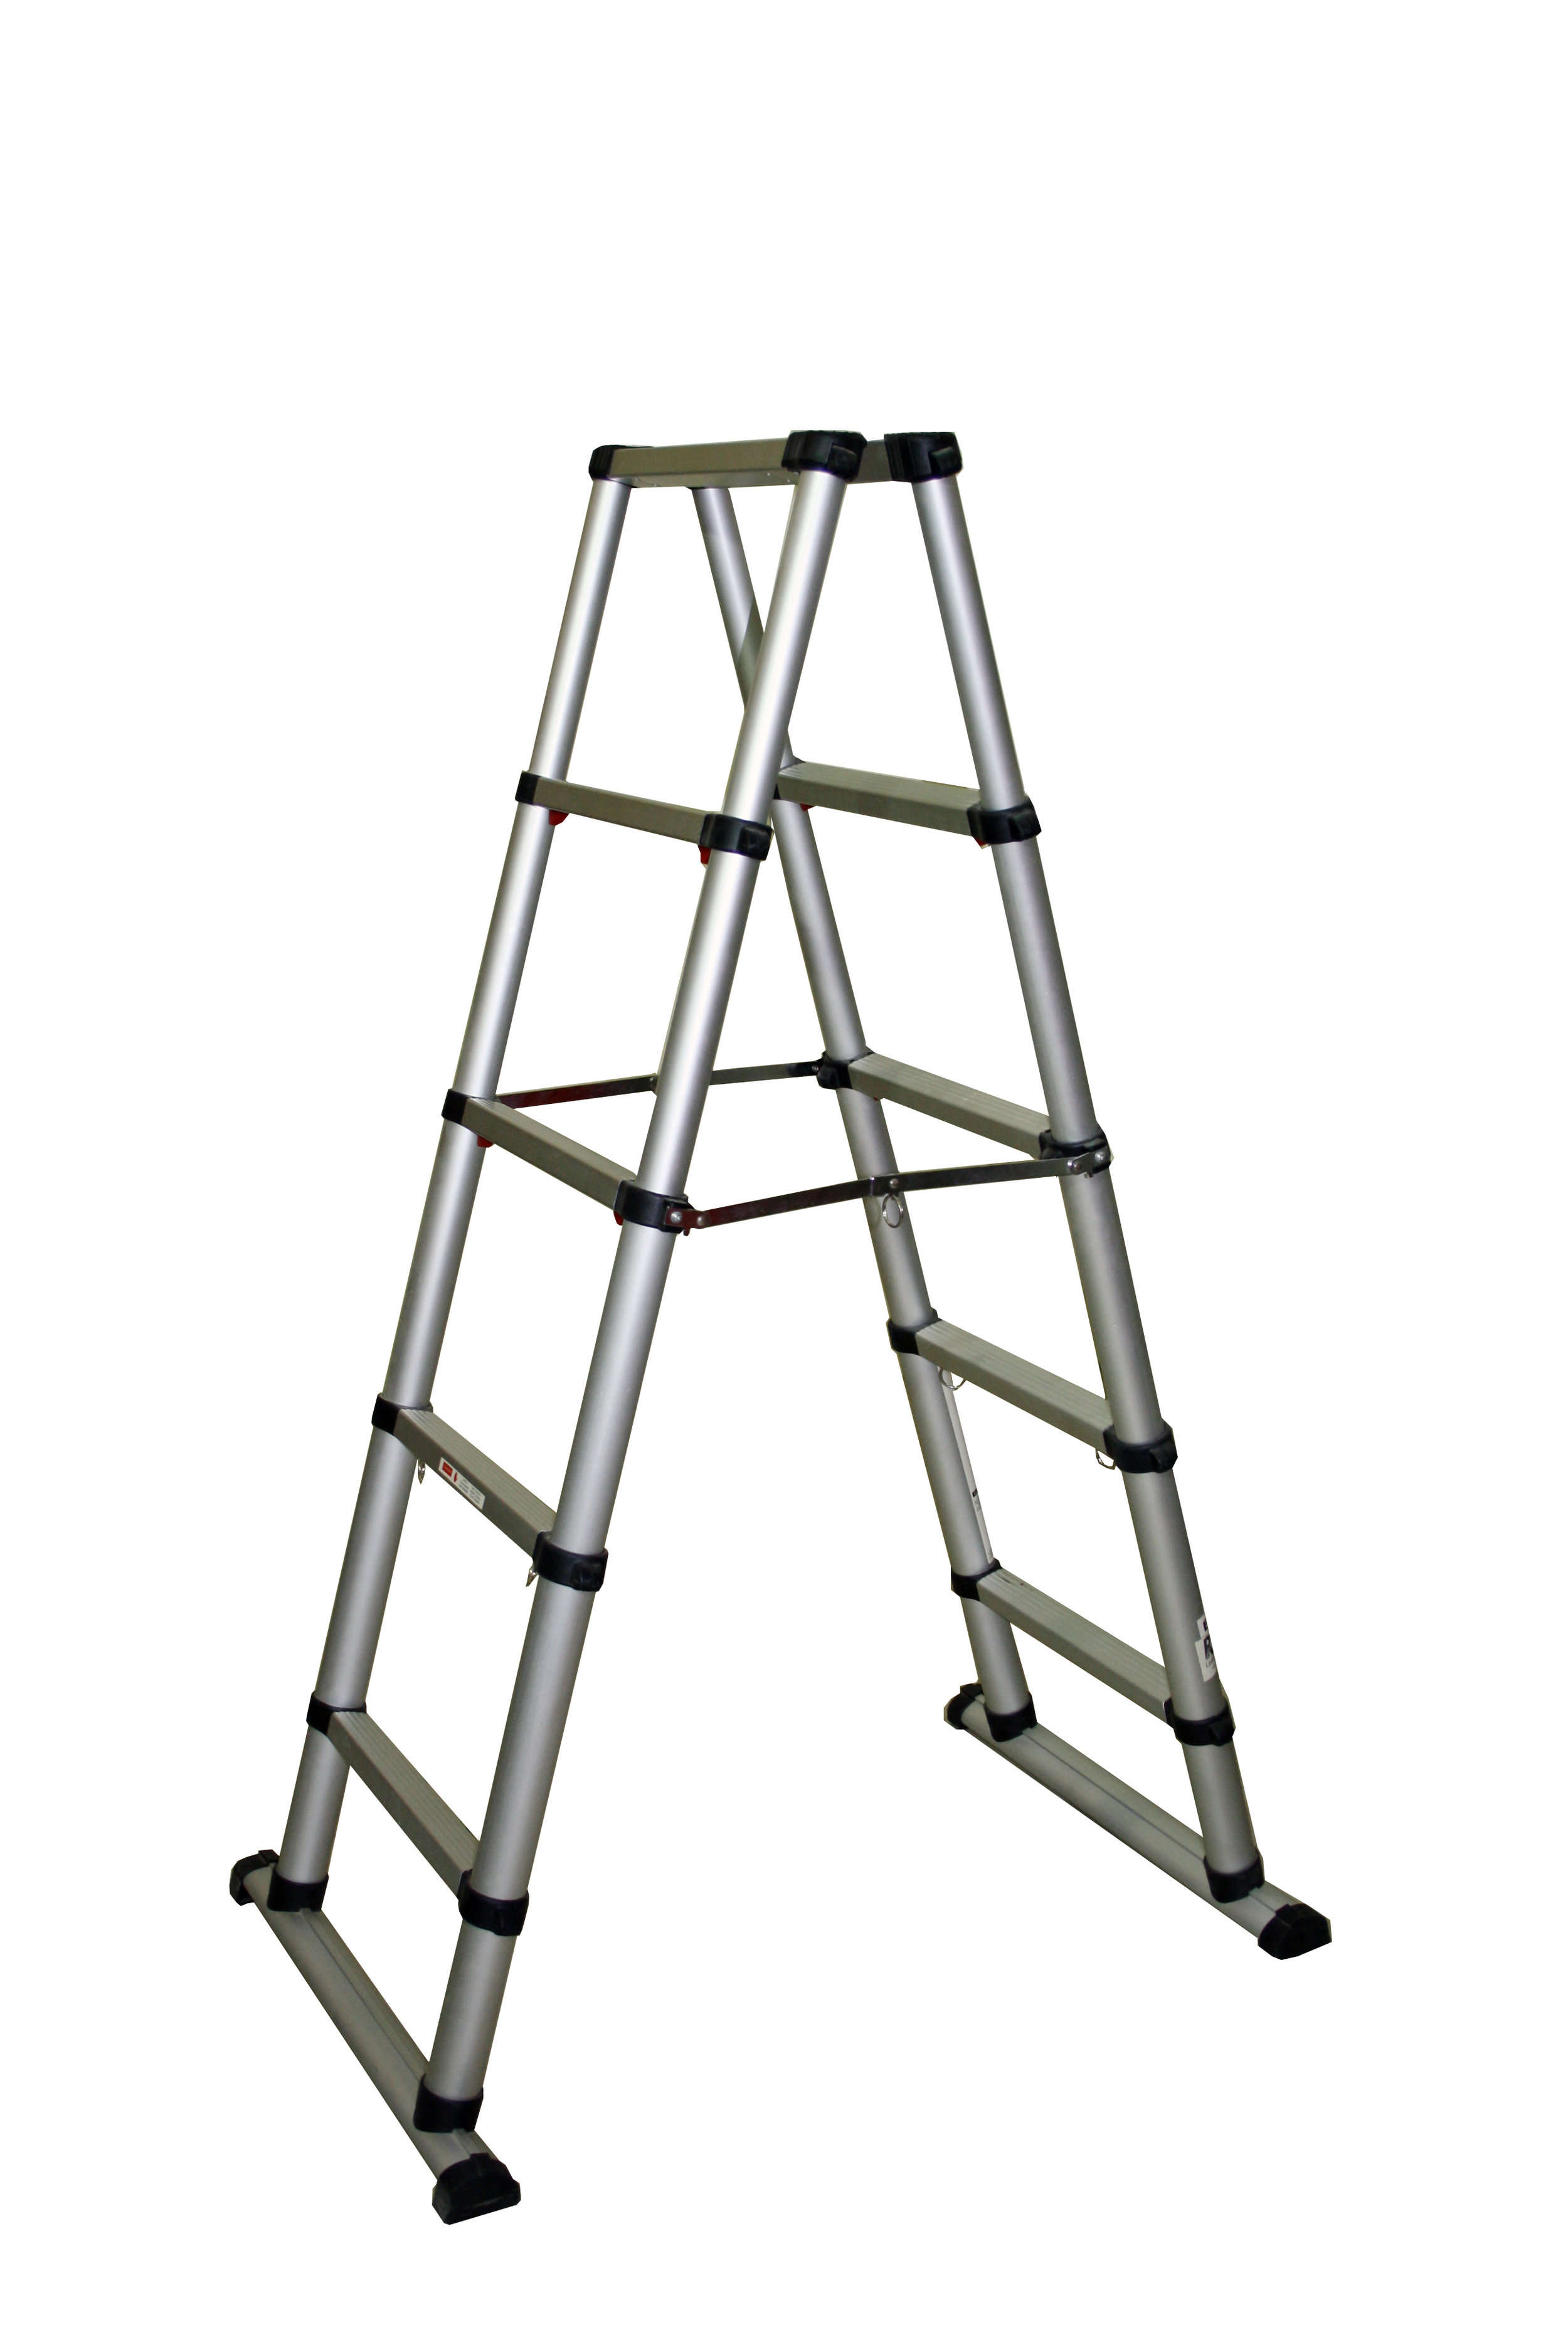 A-type-Telescopic Ladder.jpg